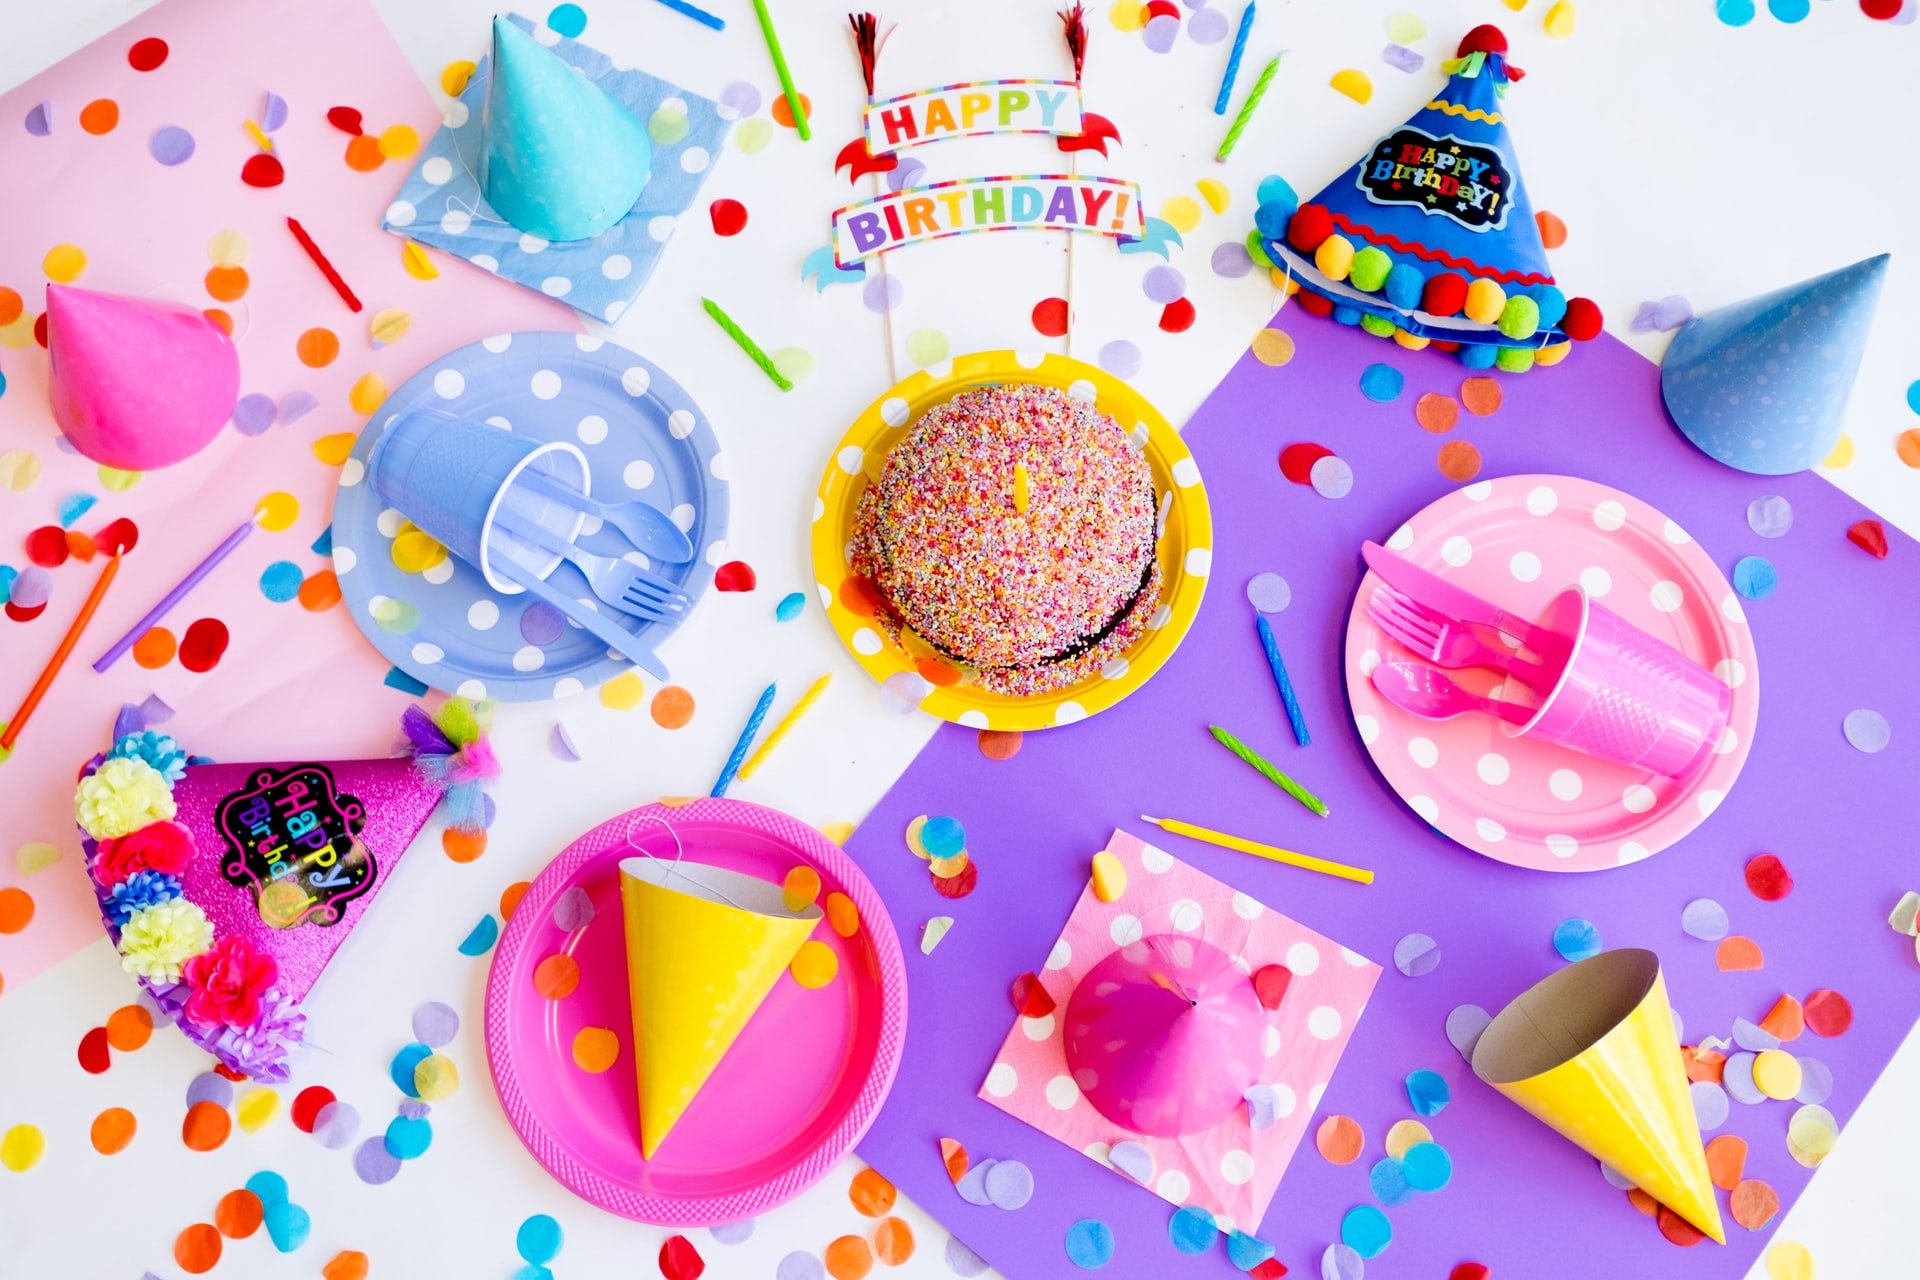 Birthday party table | Source: Unsplash